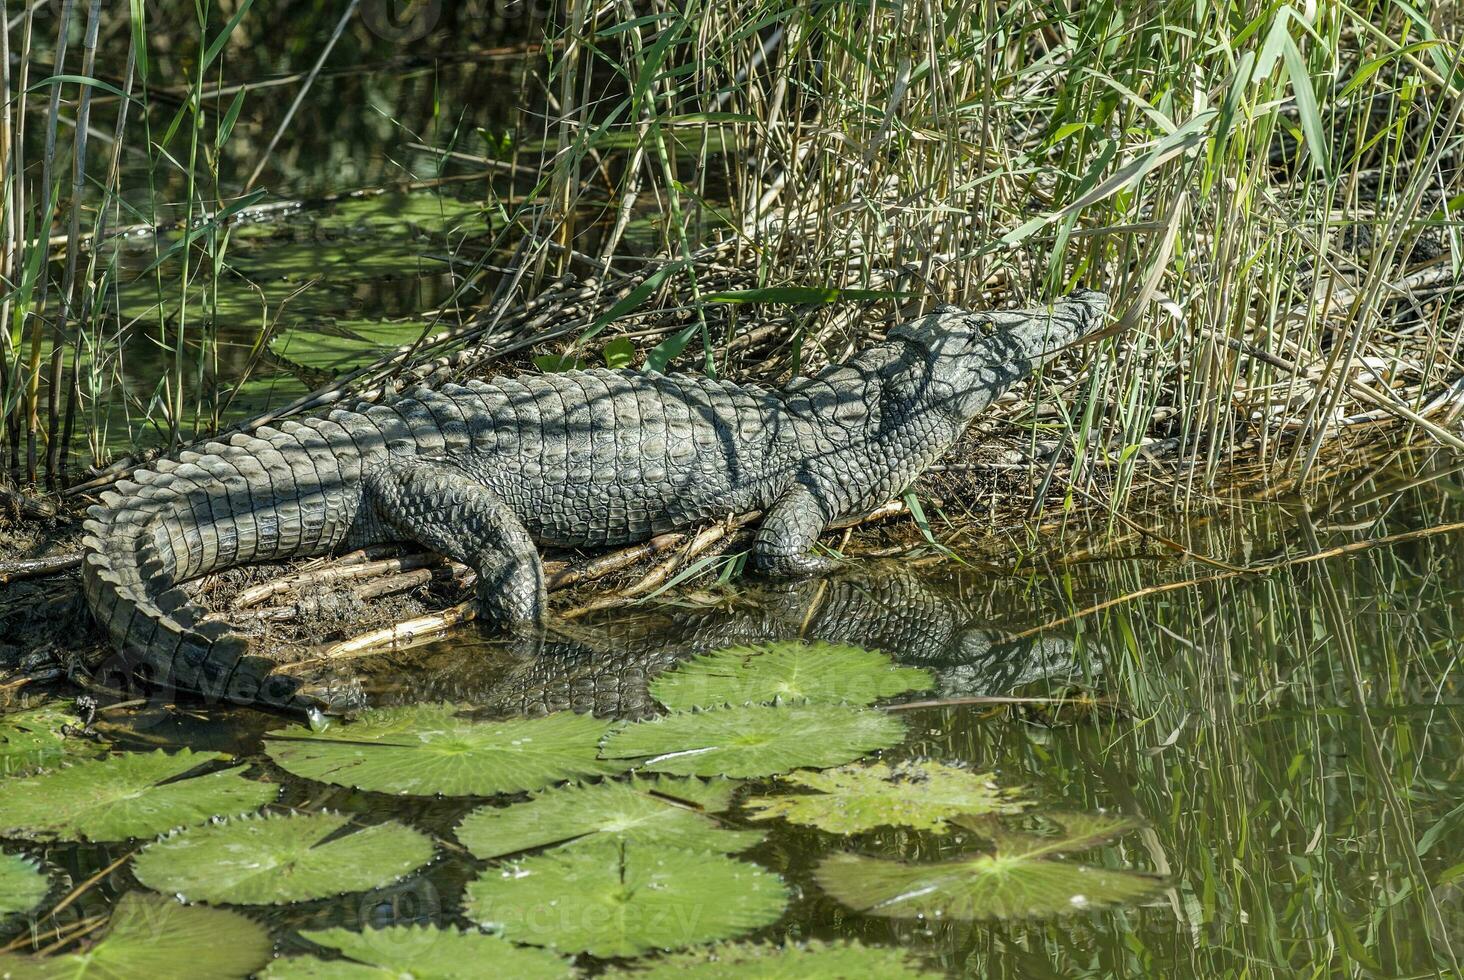 Nile Crocodryle in the water photo